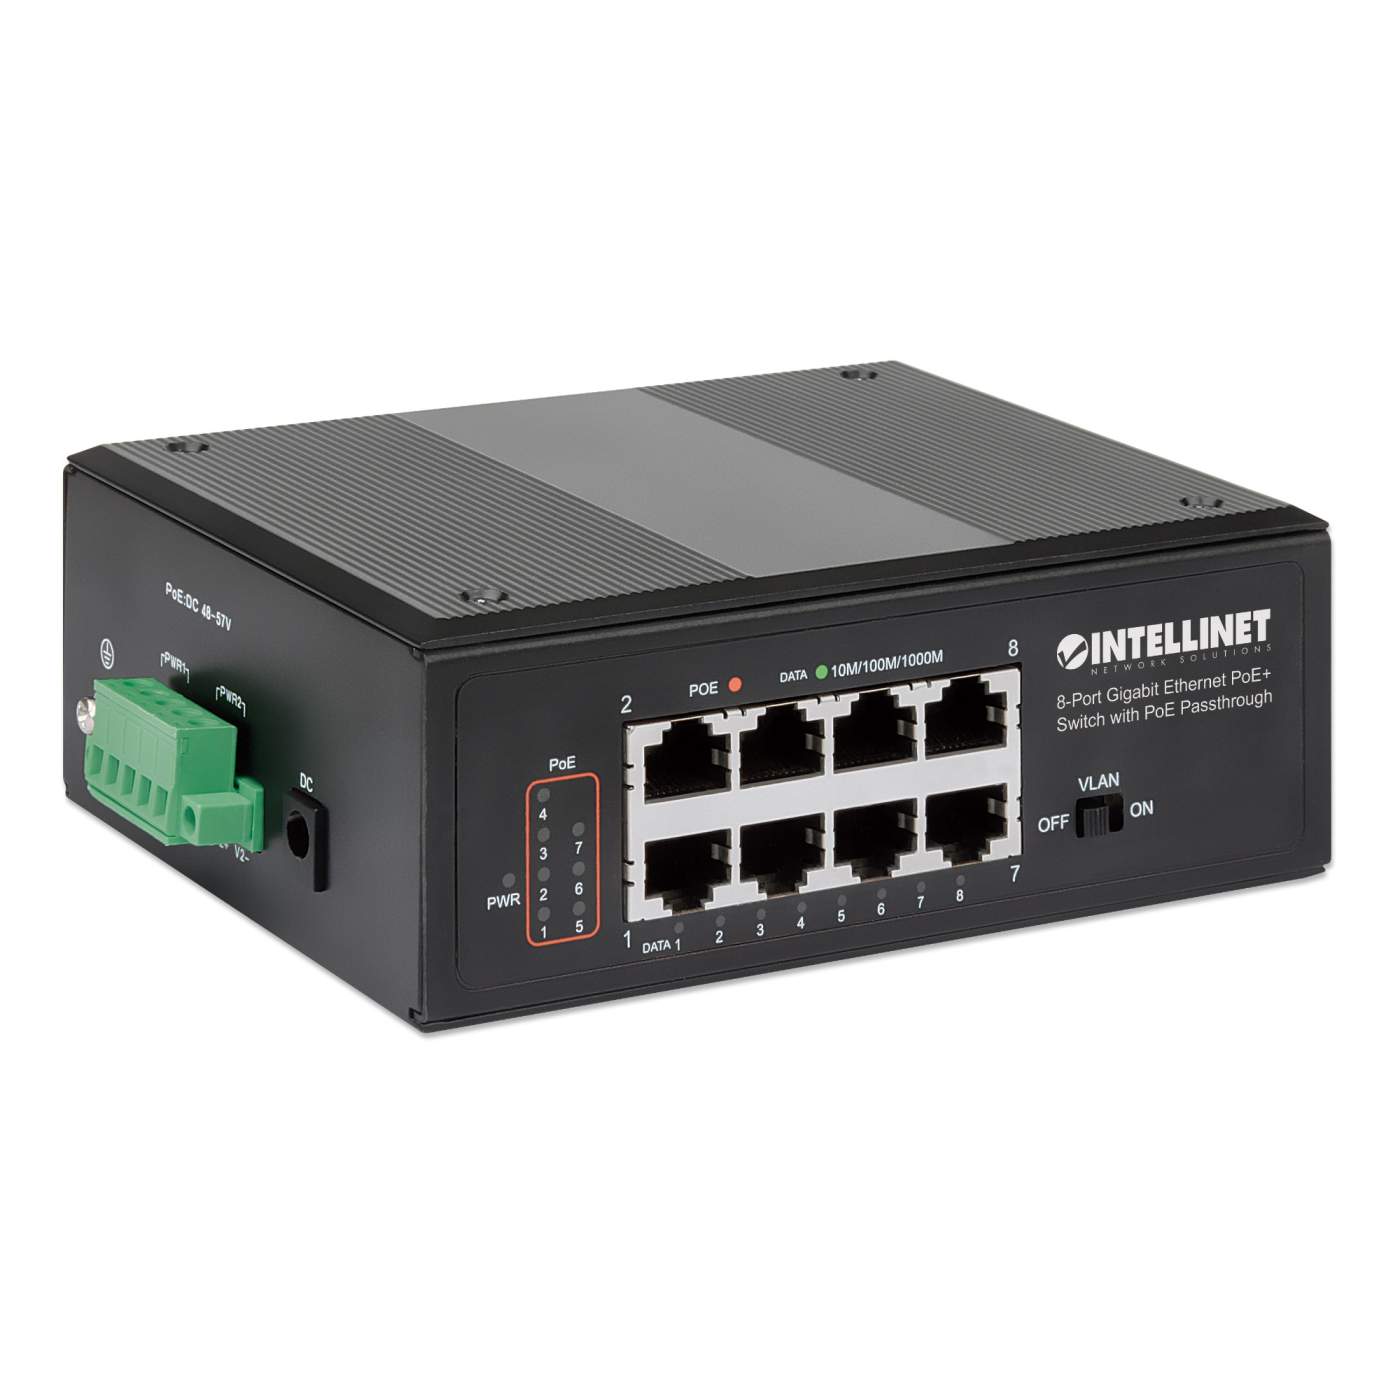 Intellinet PoE Powered 5-Port GbE Switch w/ PoE Passthrough (561082)